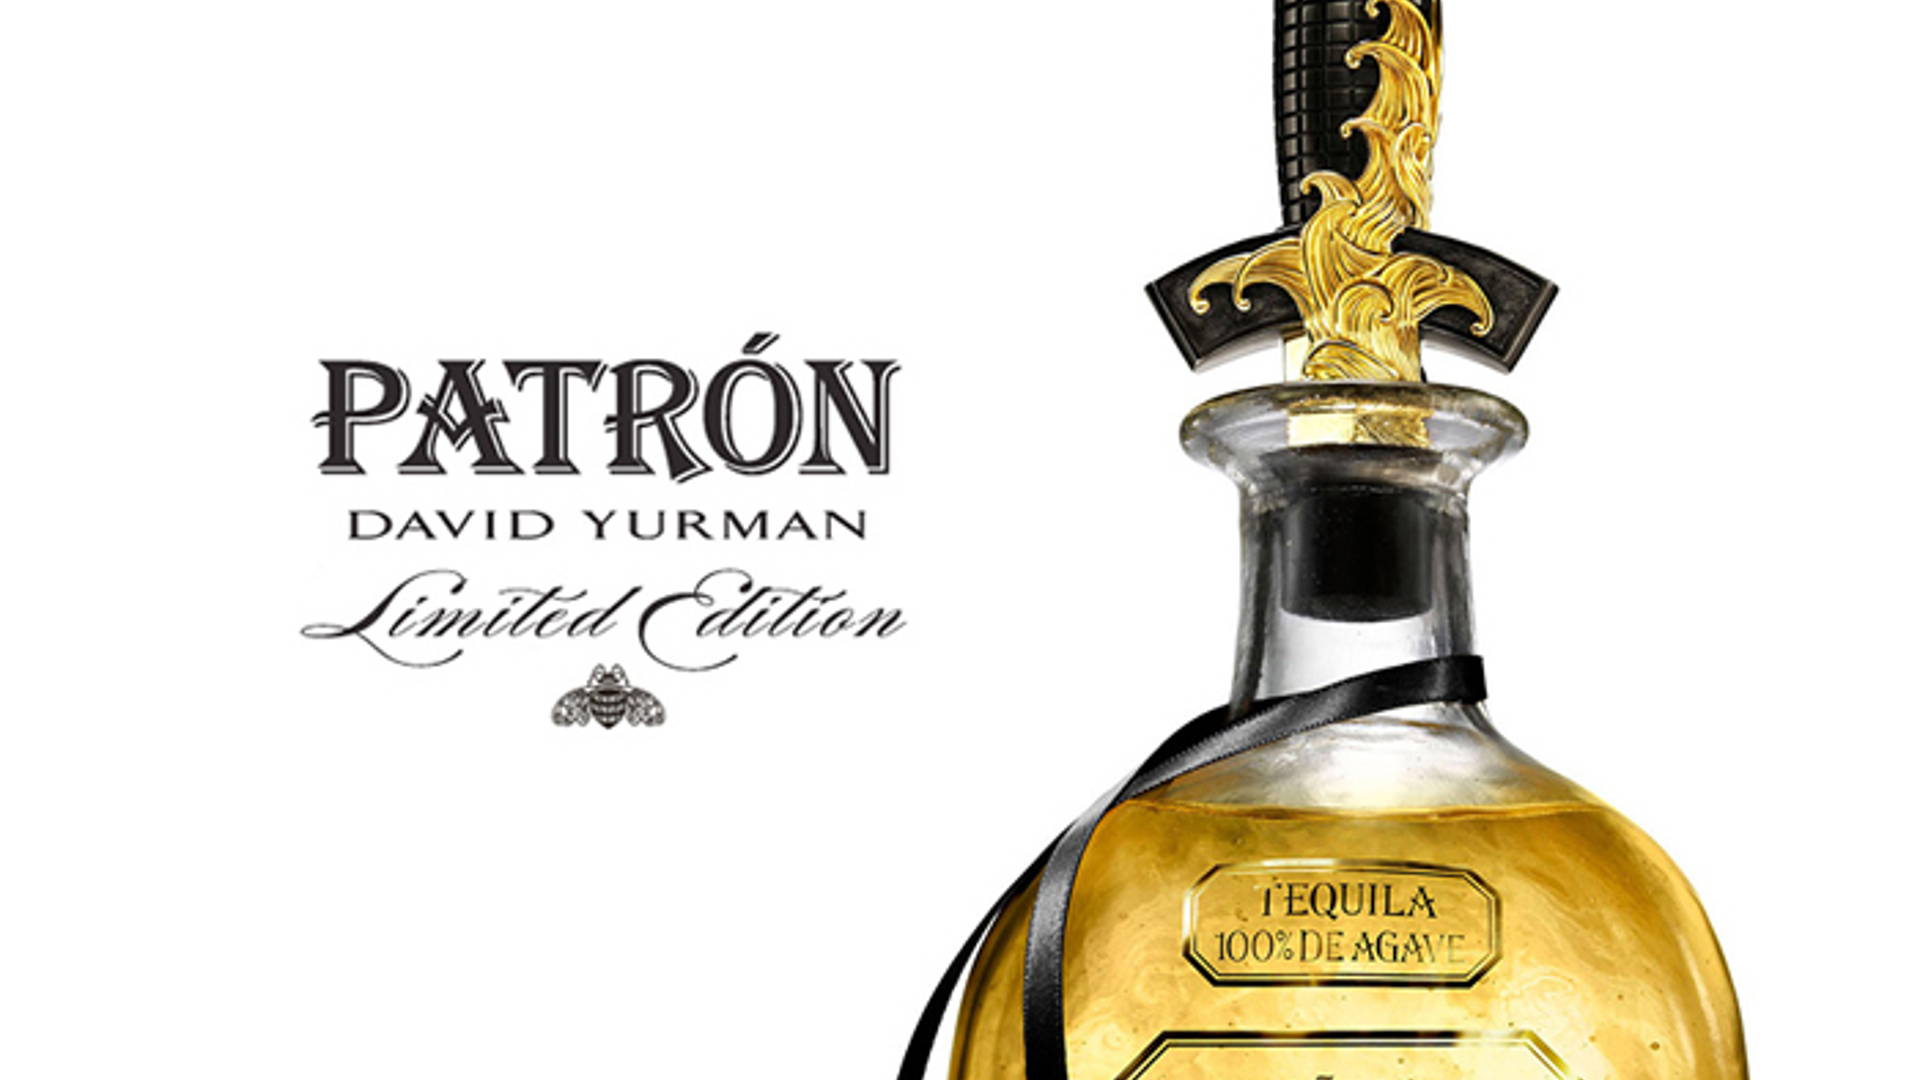 Featured image for David Yurman for Patrón Añejo Dagger Bottle Stopper, Limited Edition